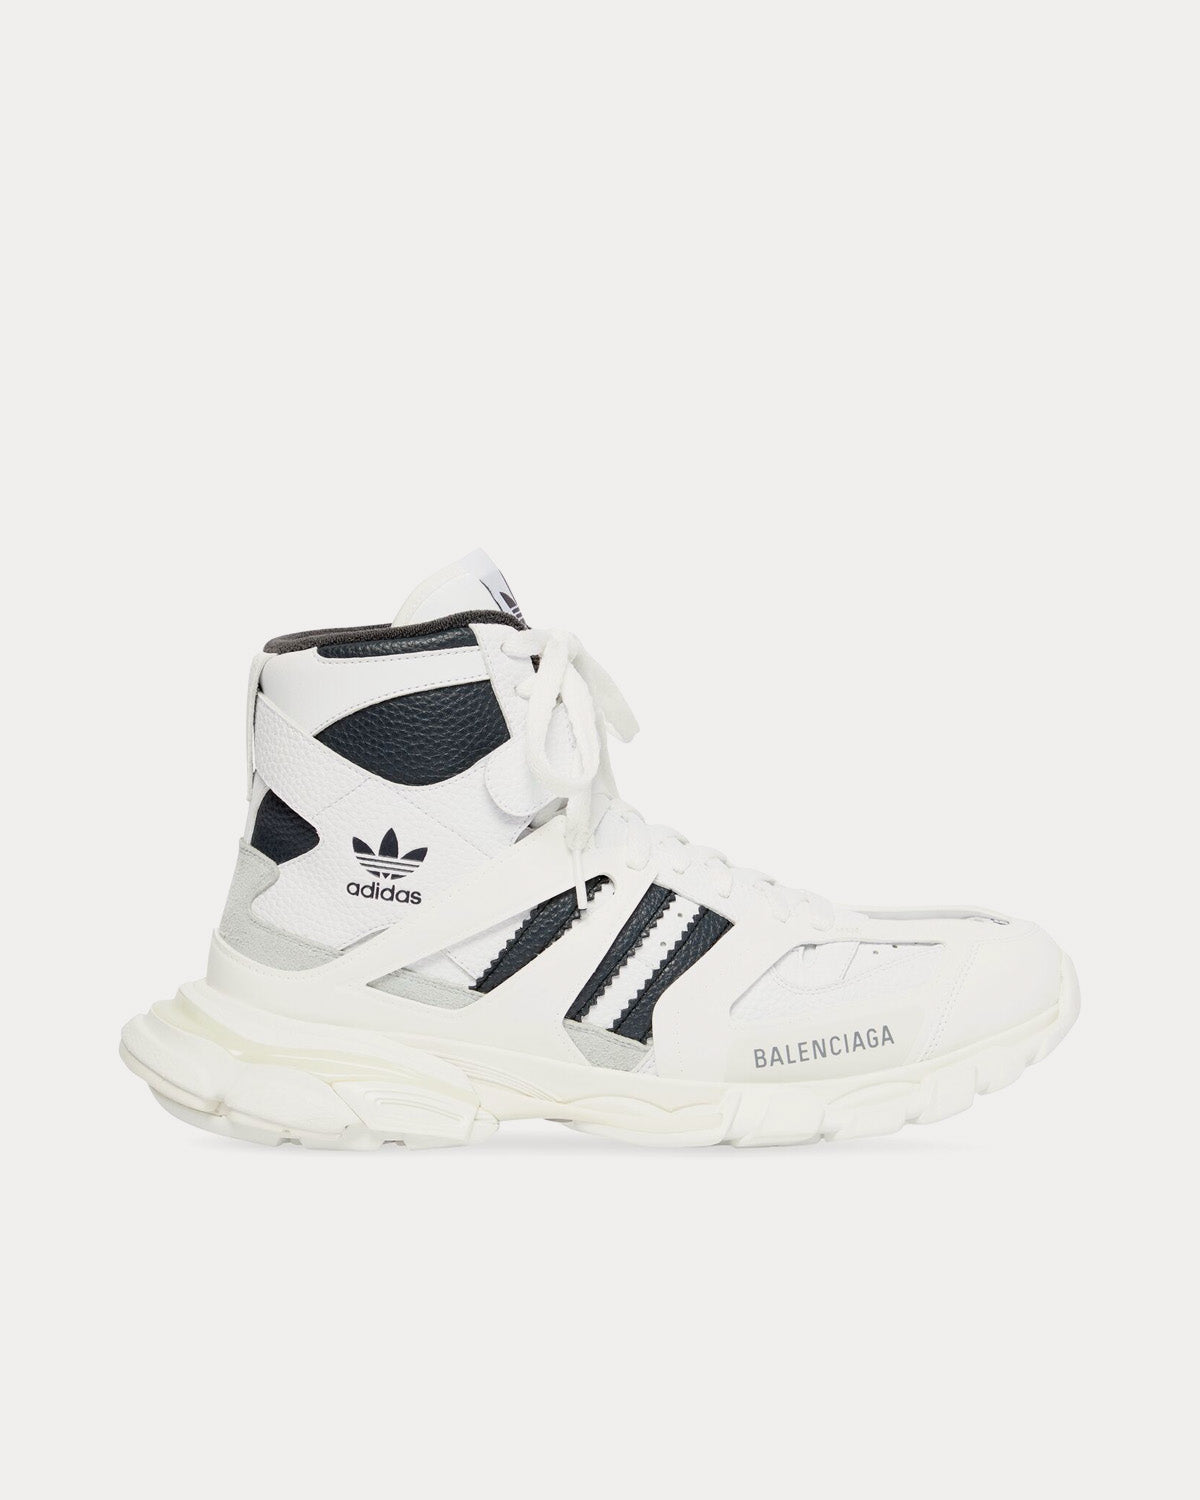 Balenciaga x Adidas - Track Forum White / Black High Top Sneakers